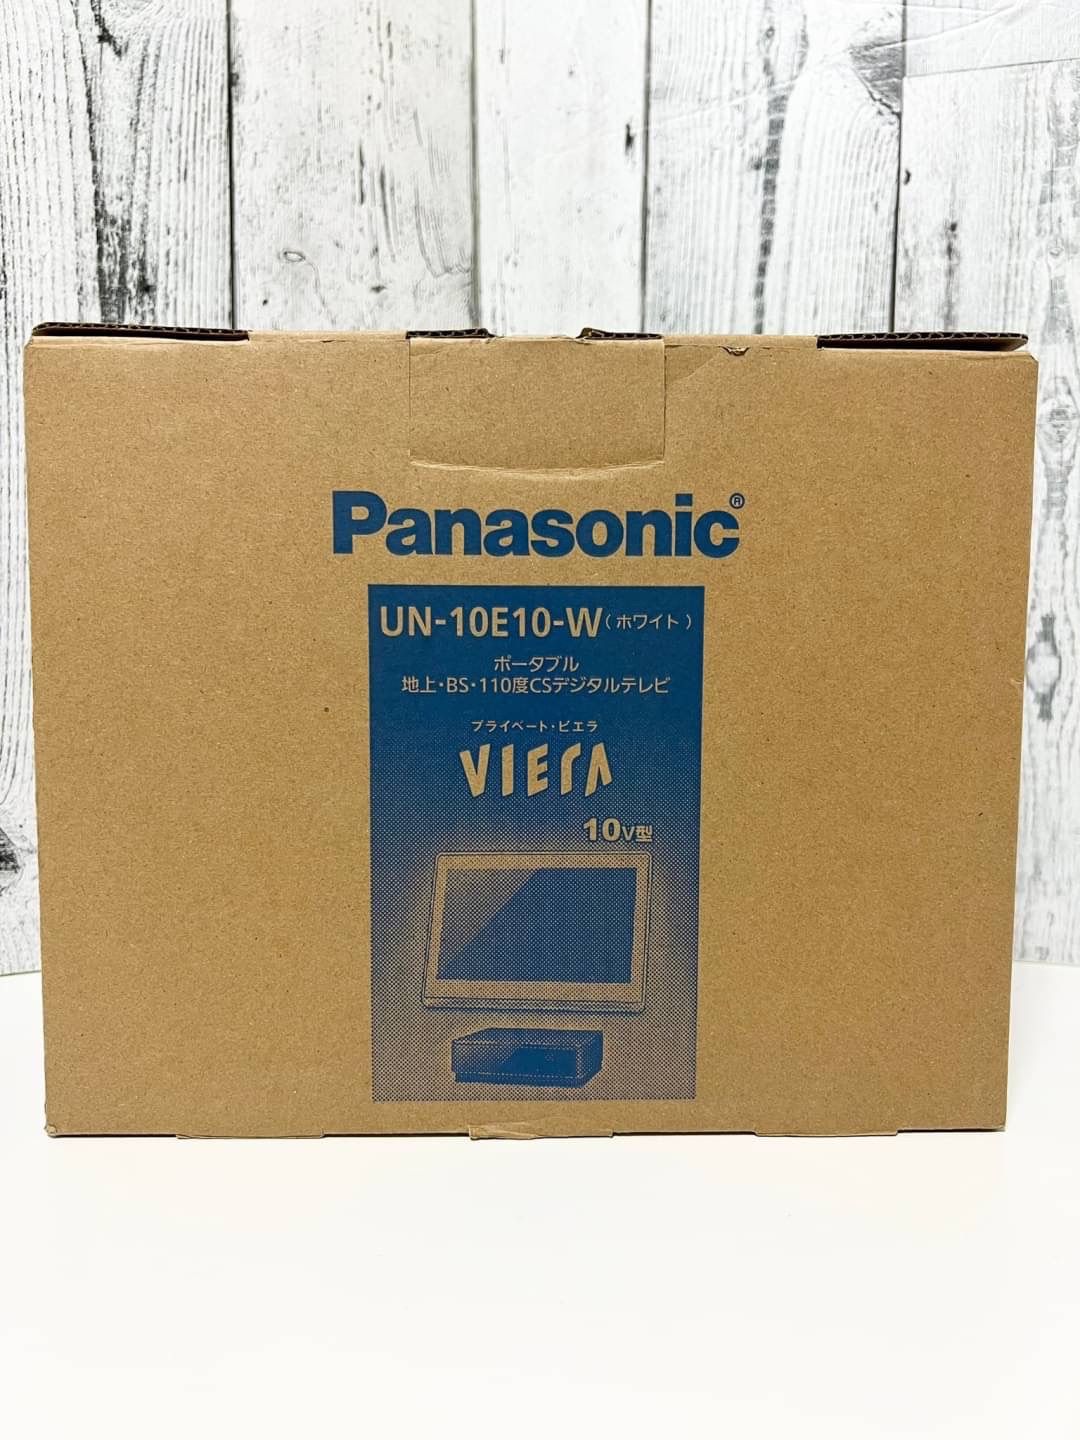 Panasonic UN-10E10-W WHITE